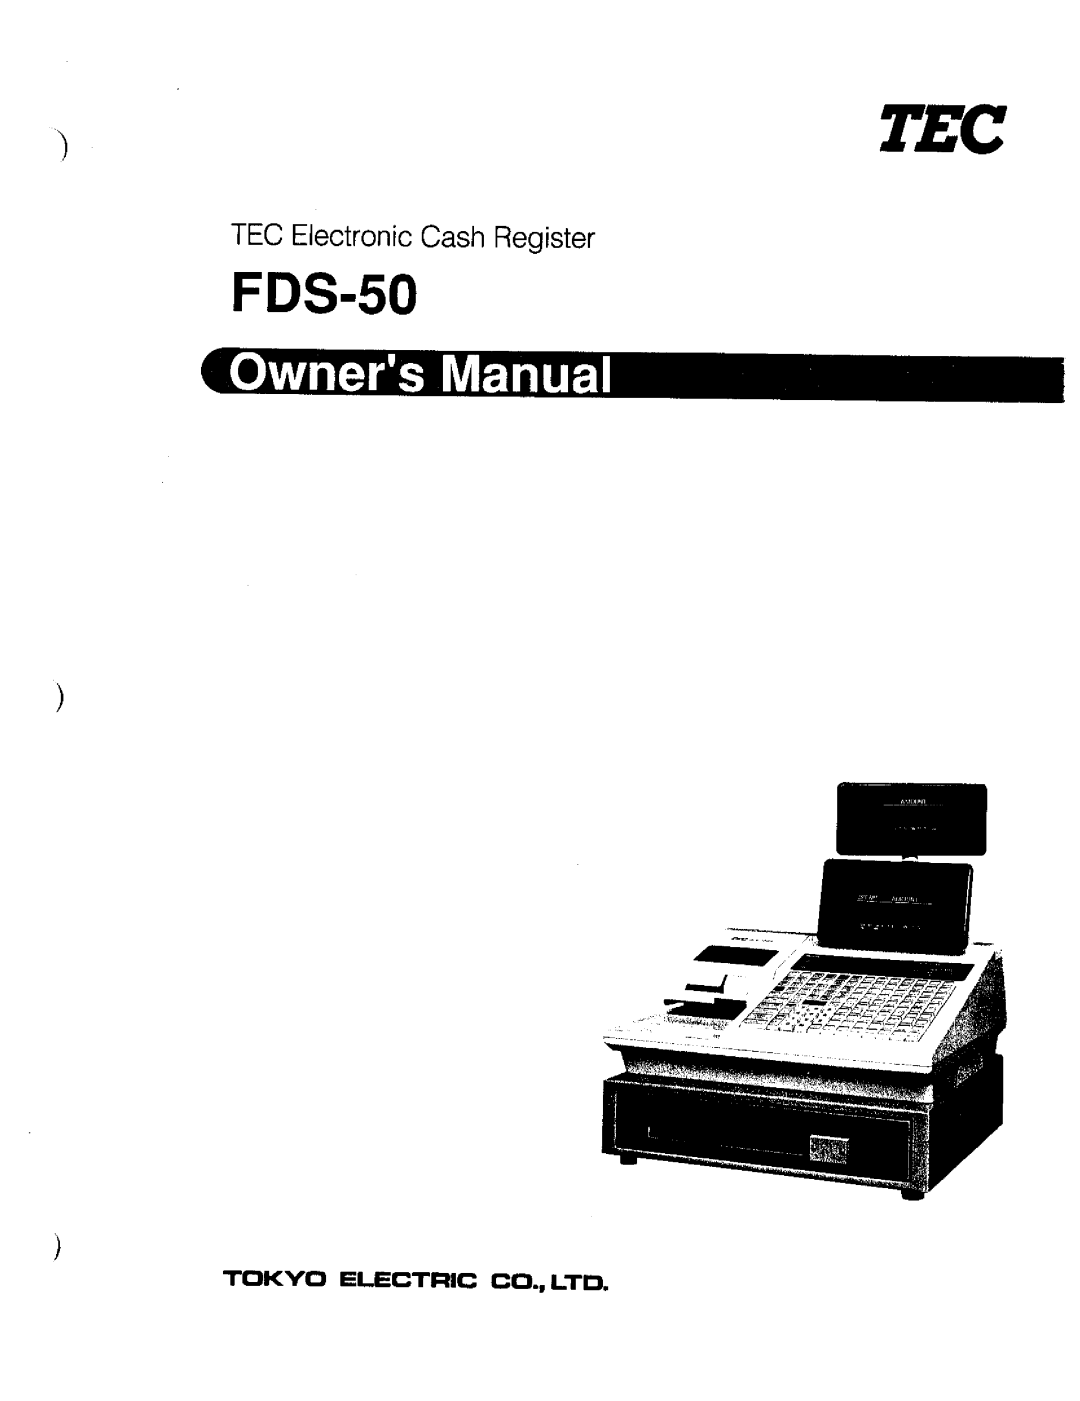 Toshiba FDS-50 manual 